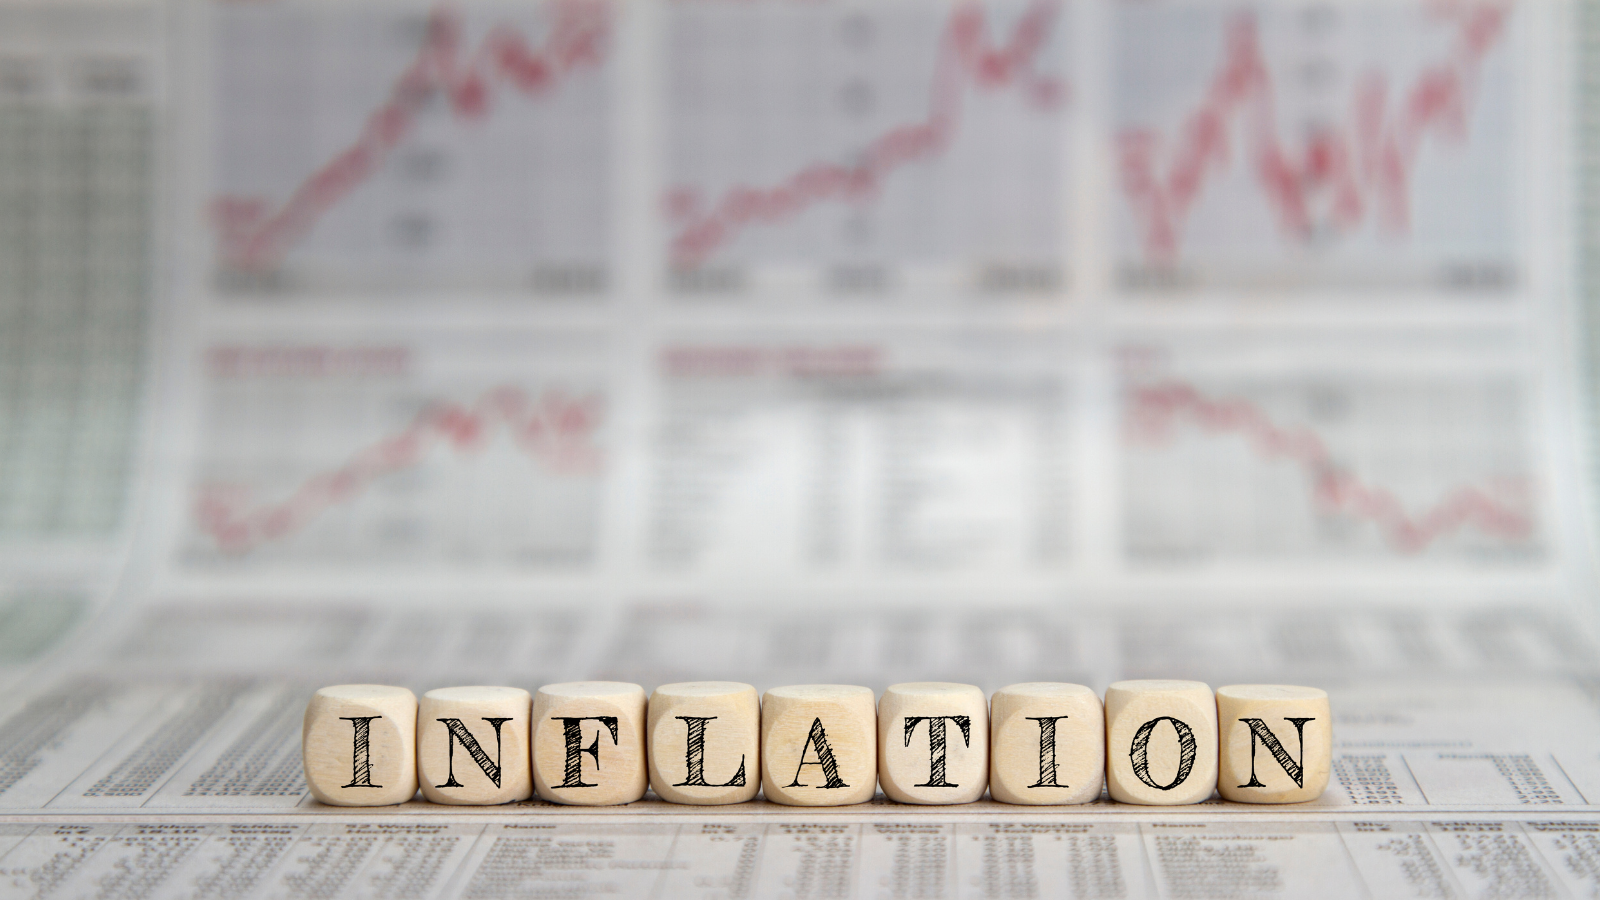 UK inflation data supports Hawkish agenda